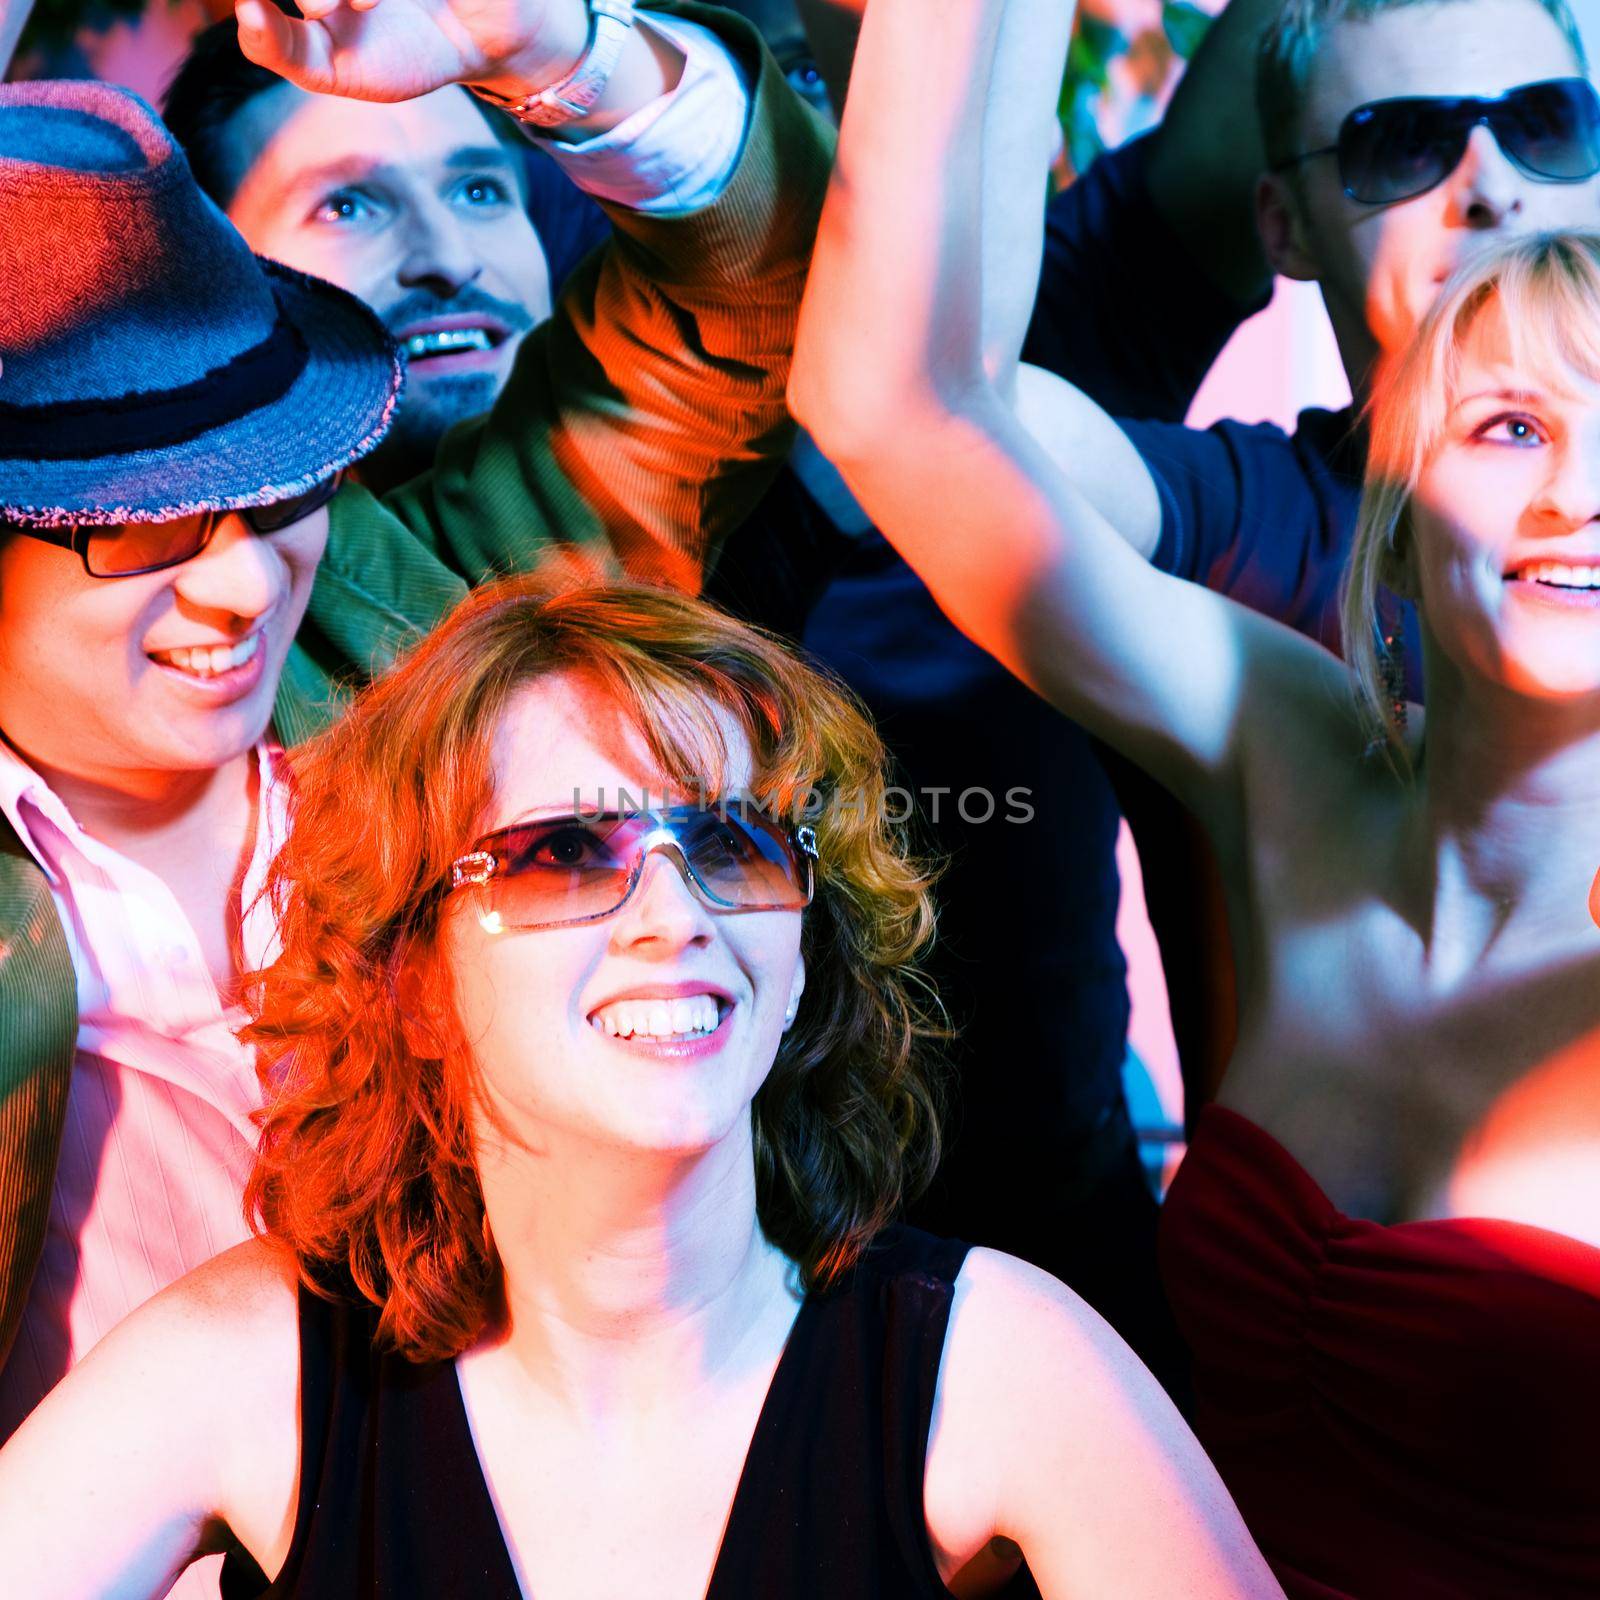 Cheering crowd in disco club by Kzenon